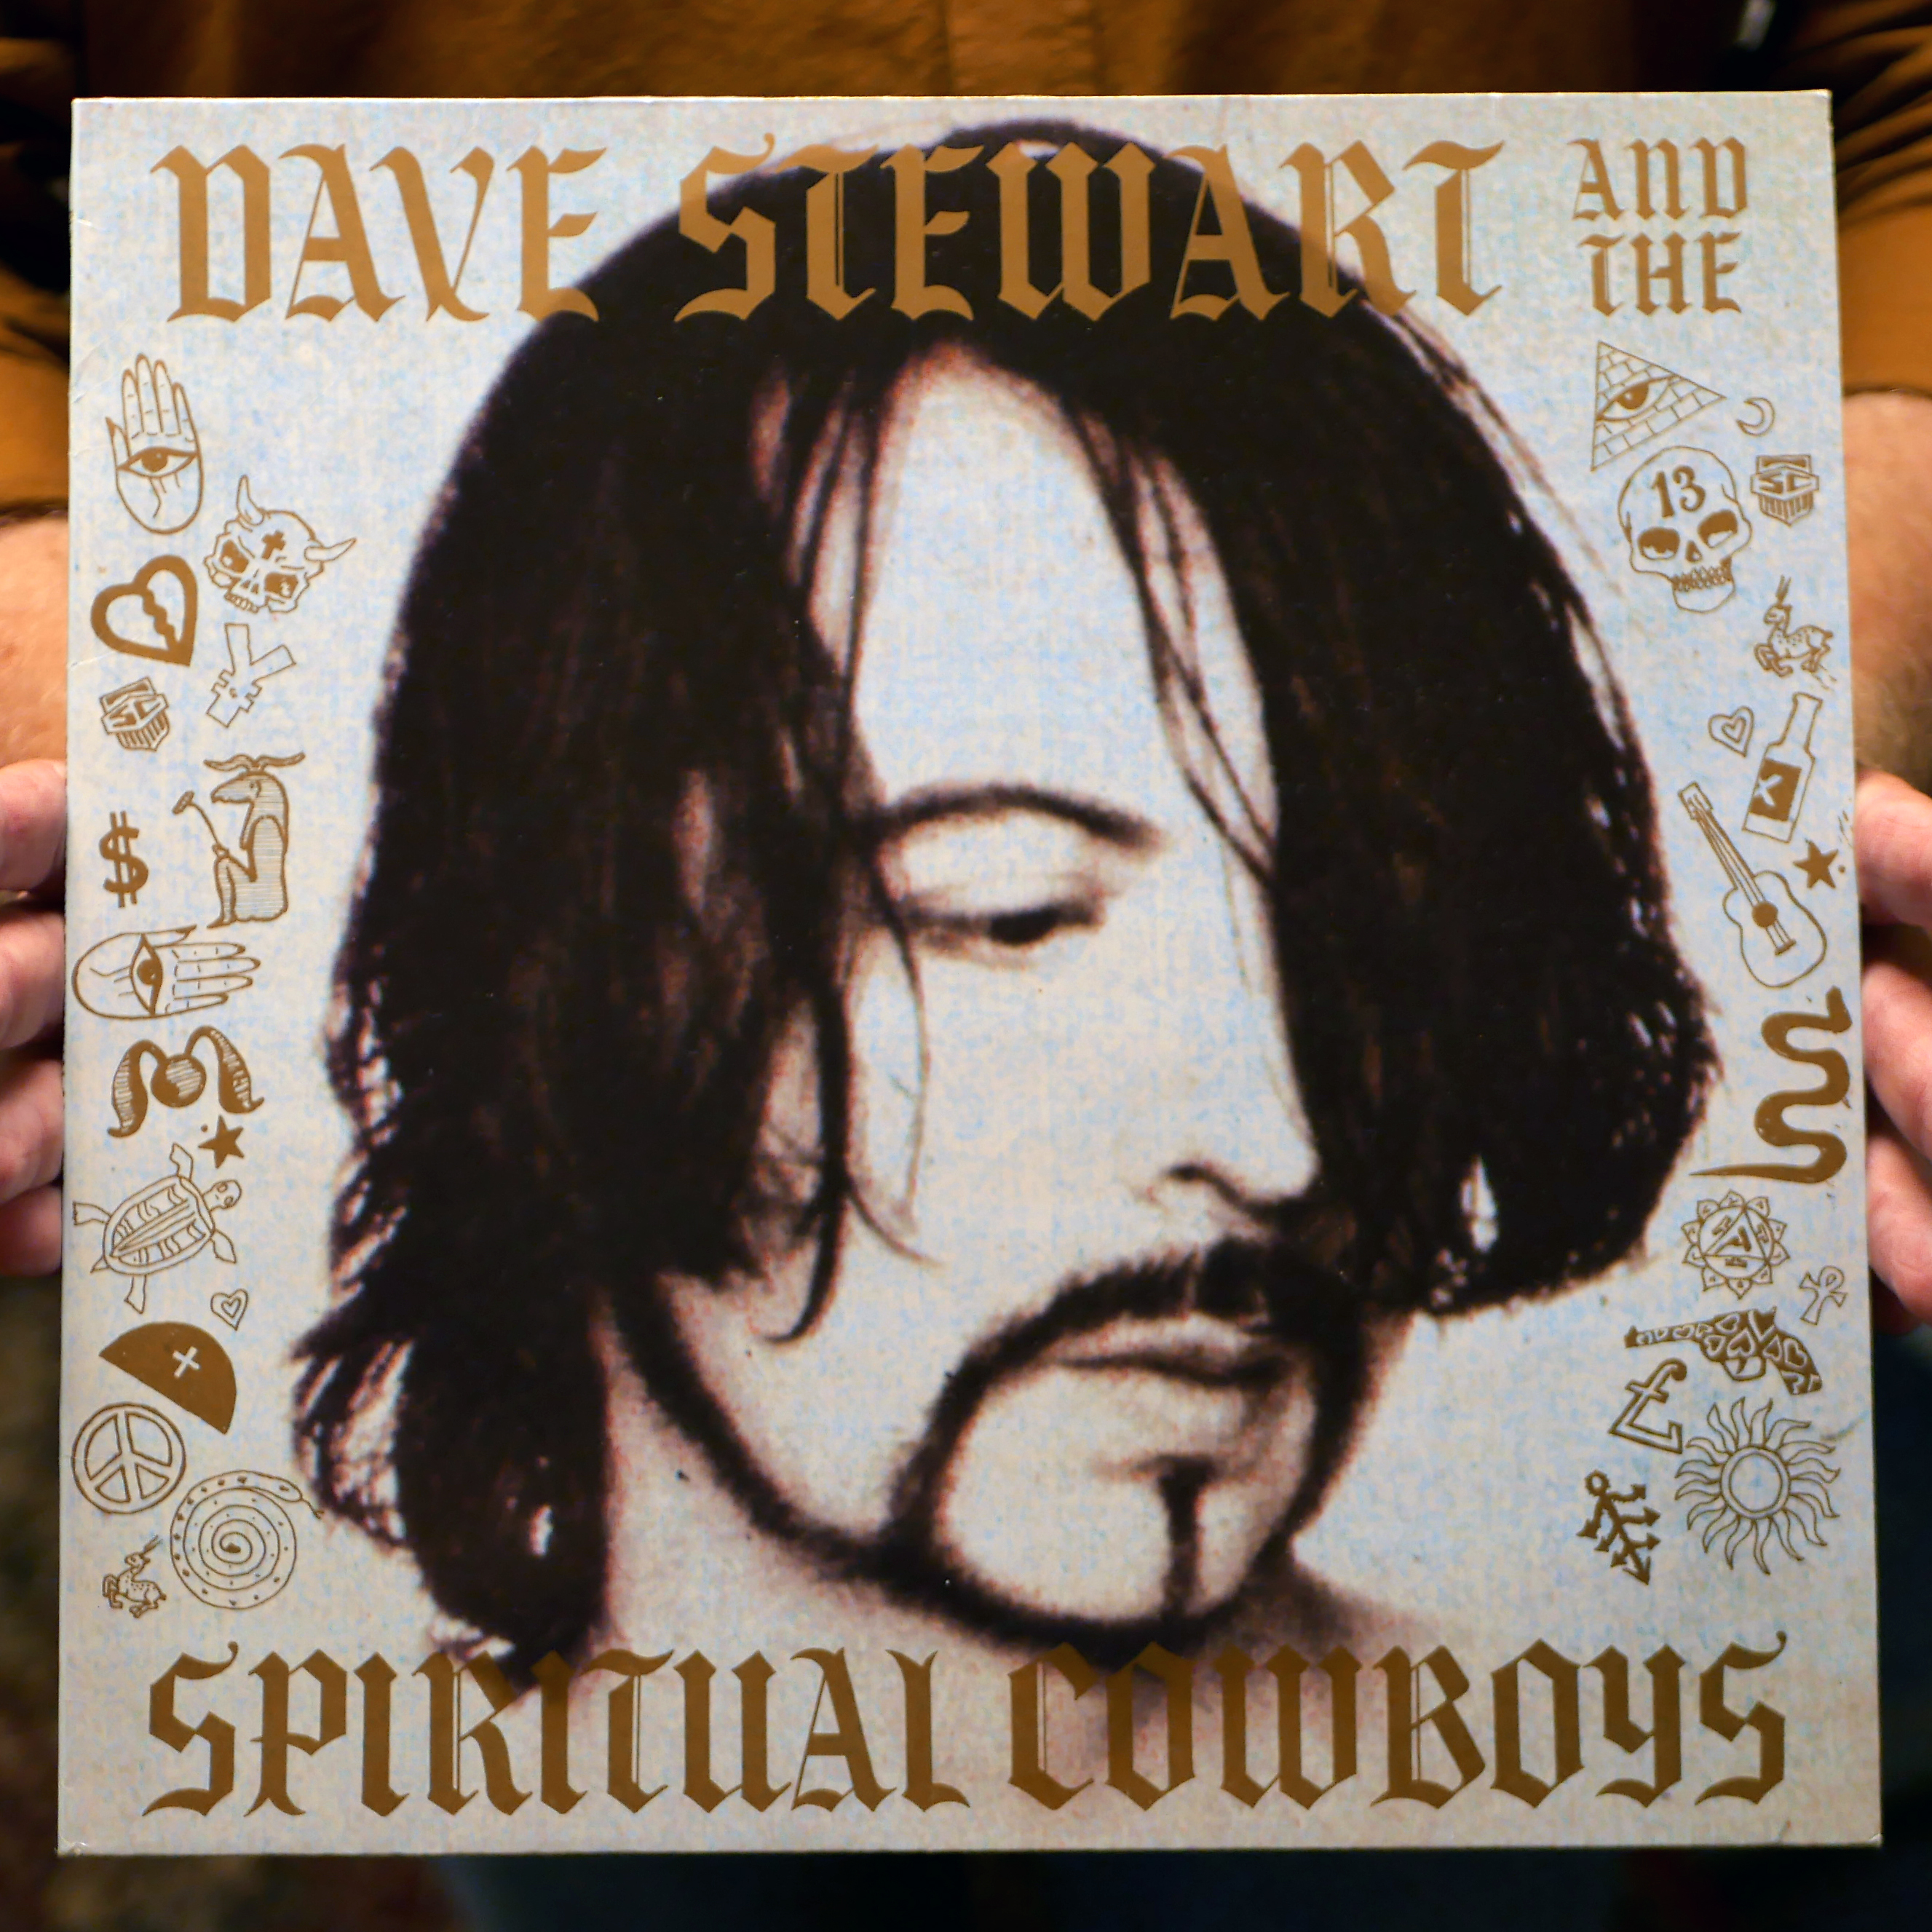 Dave Stewart and The Spiritual Cowboy – S/T [LP, 1990]